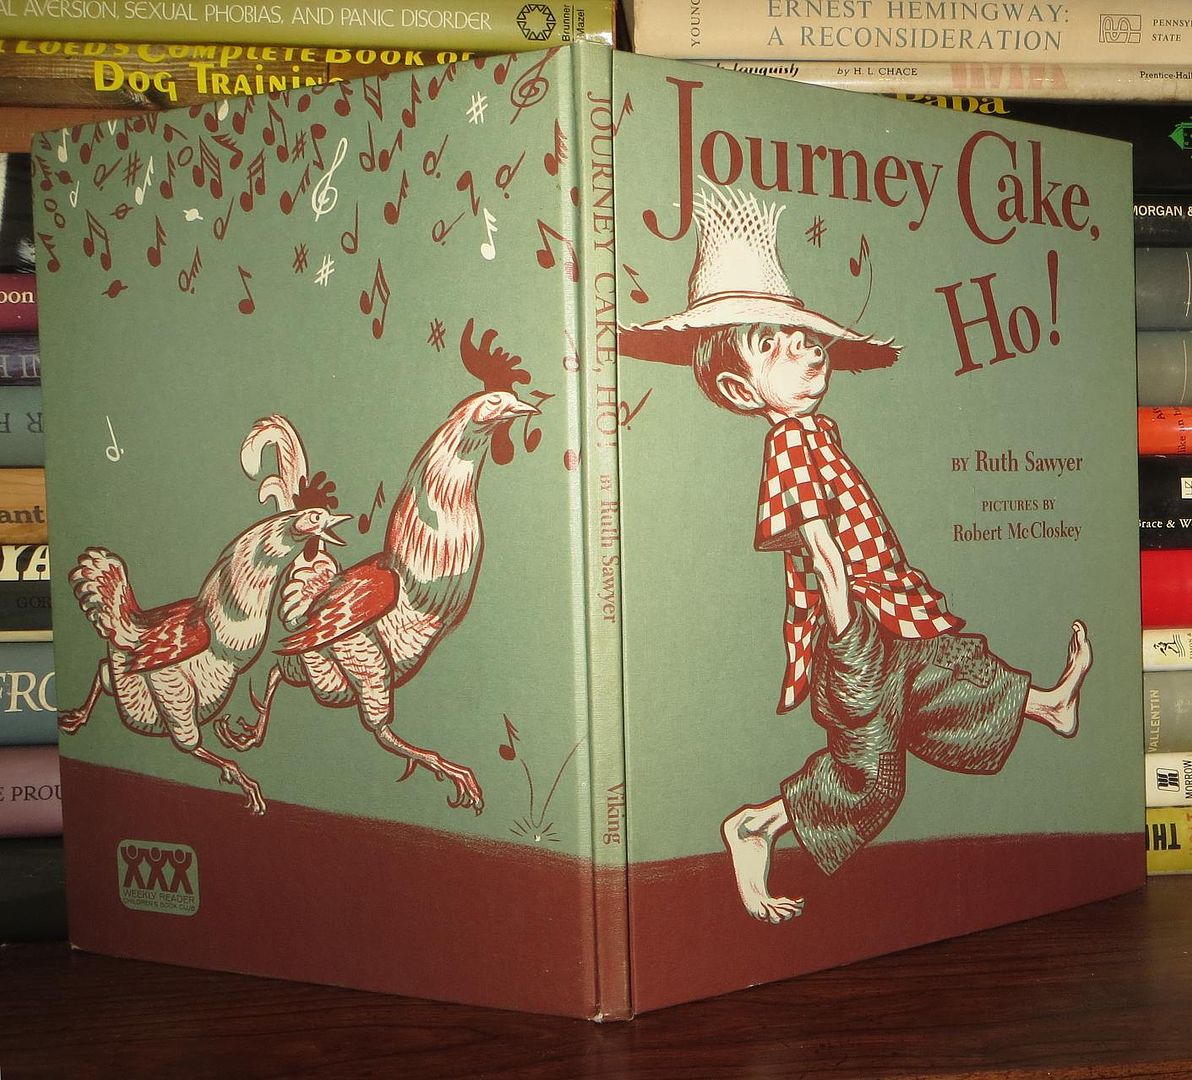 SAWYER, RUTH - Journey Cake, Ho!